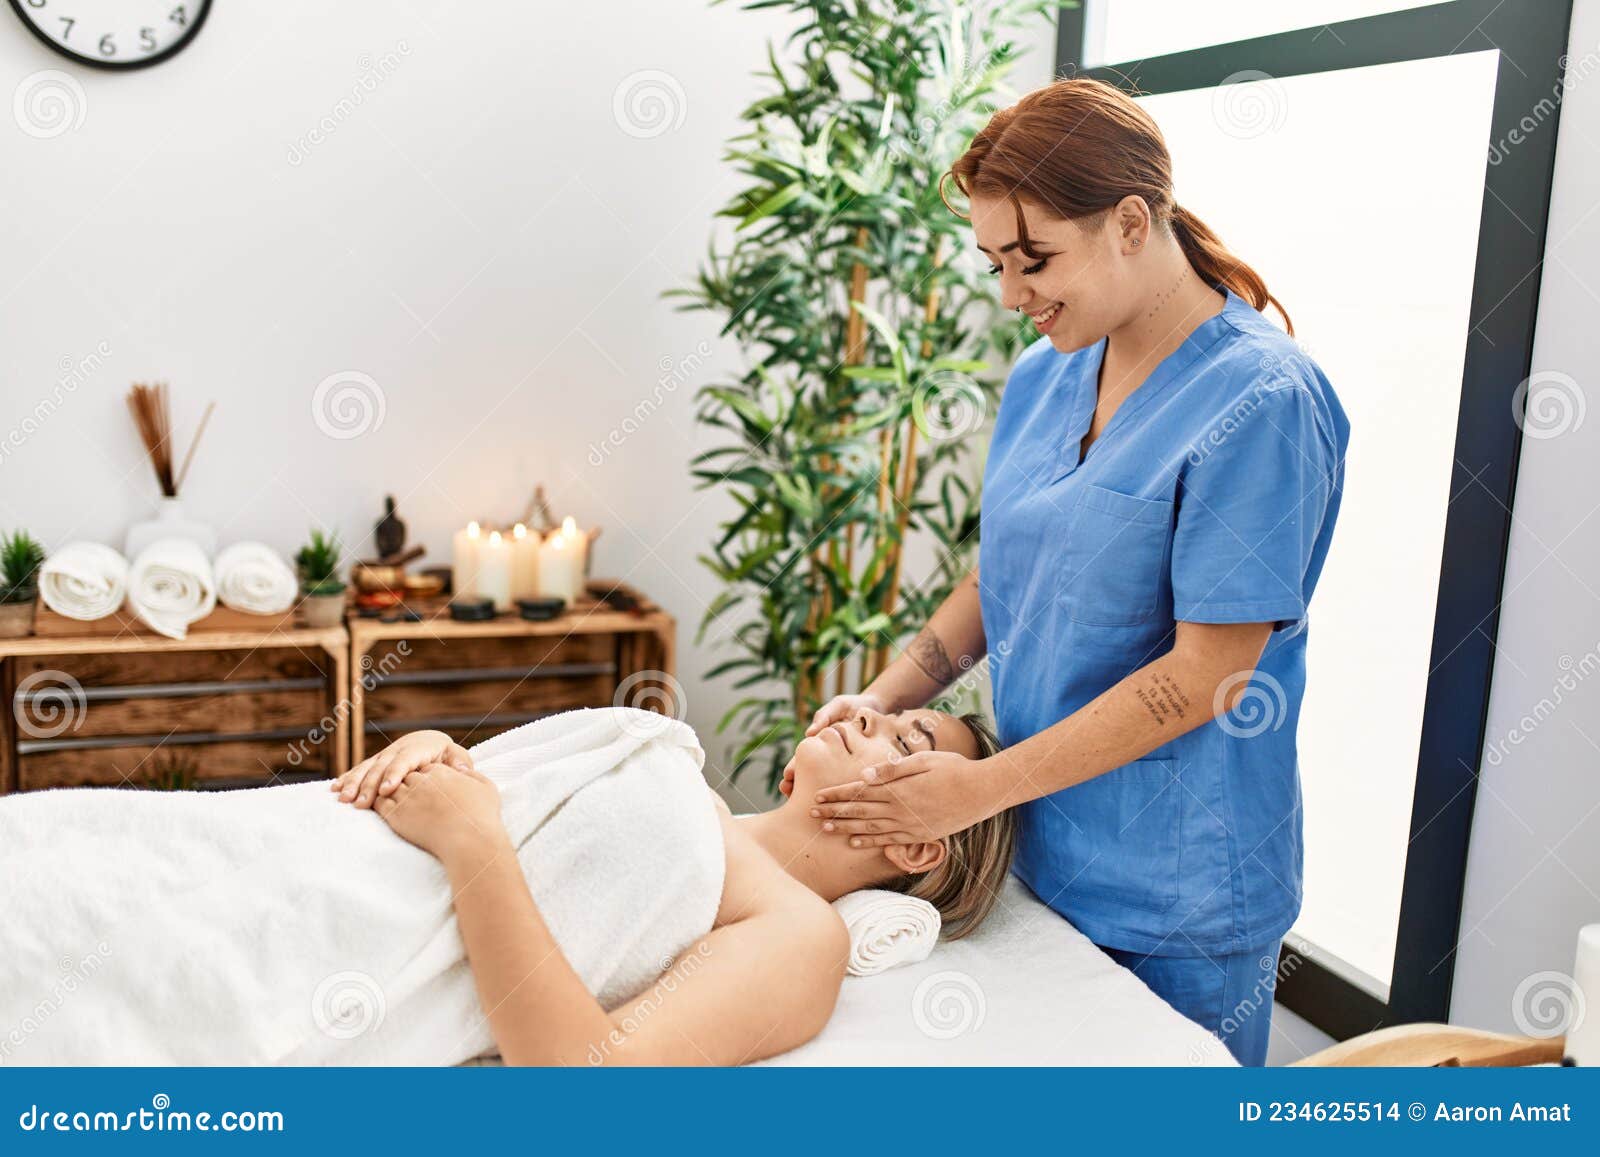 woman couple smiling confident having facial massage at beauty center